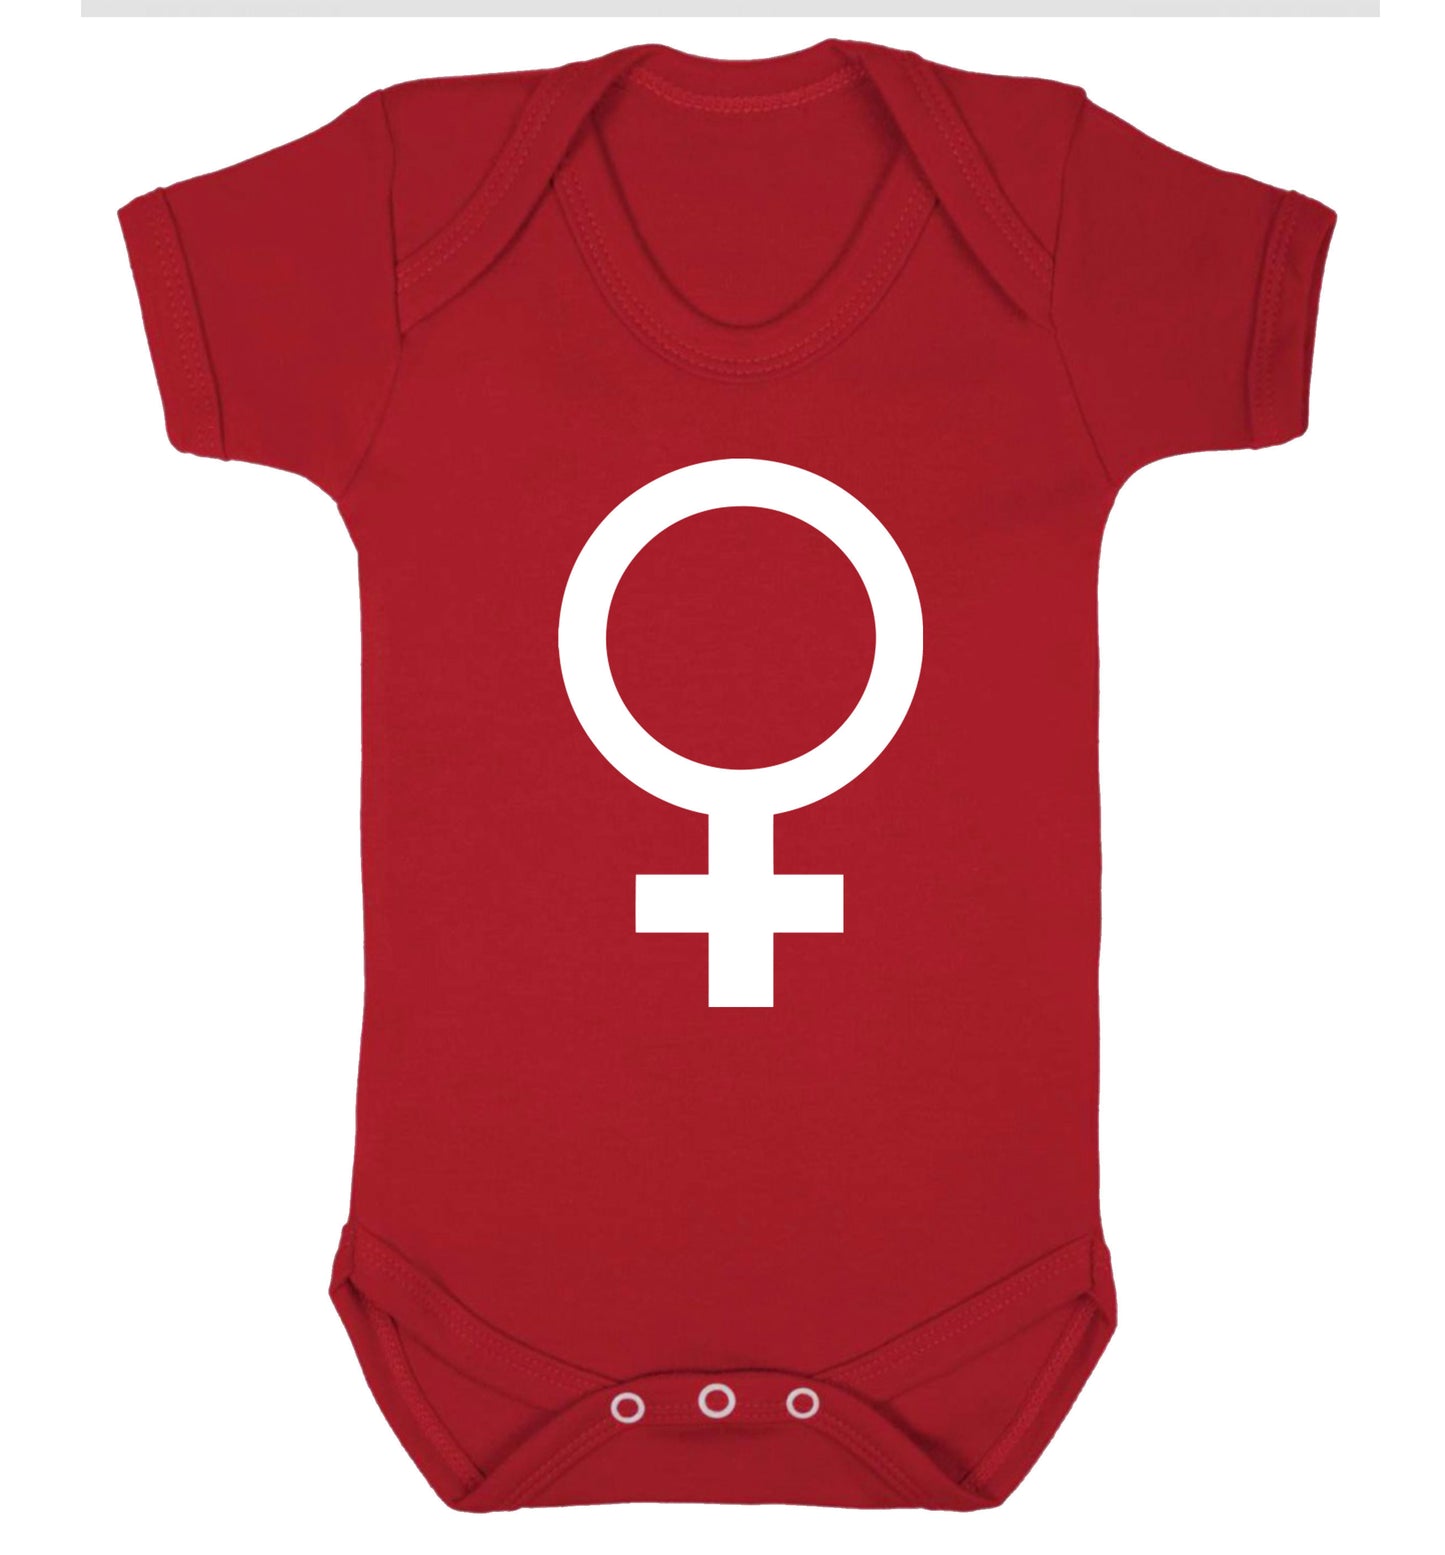 Female symbol large Baby Vest red 18-24 months